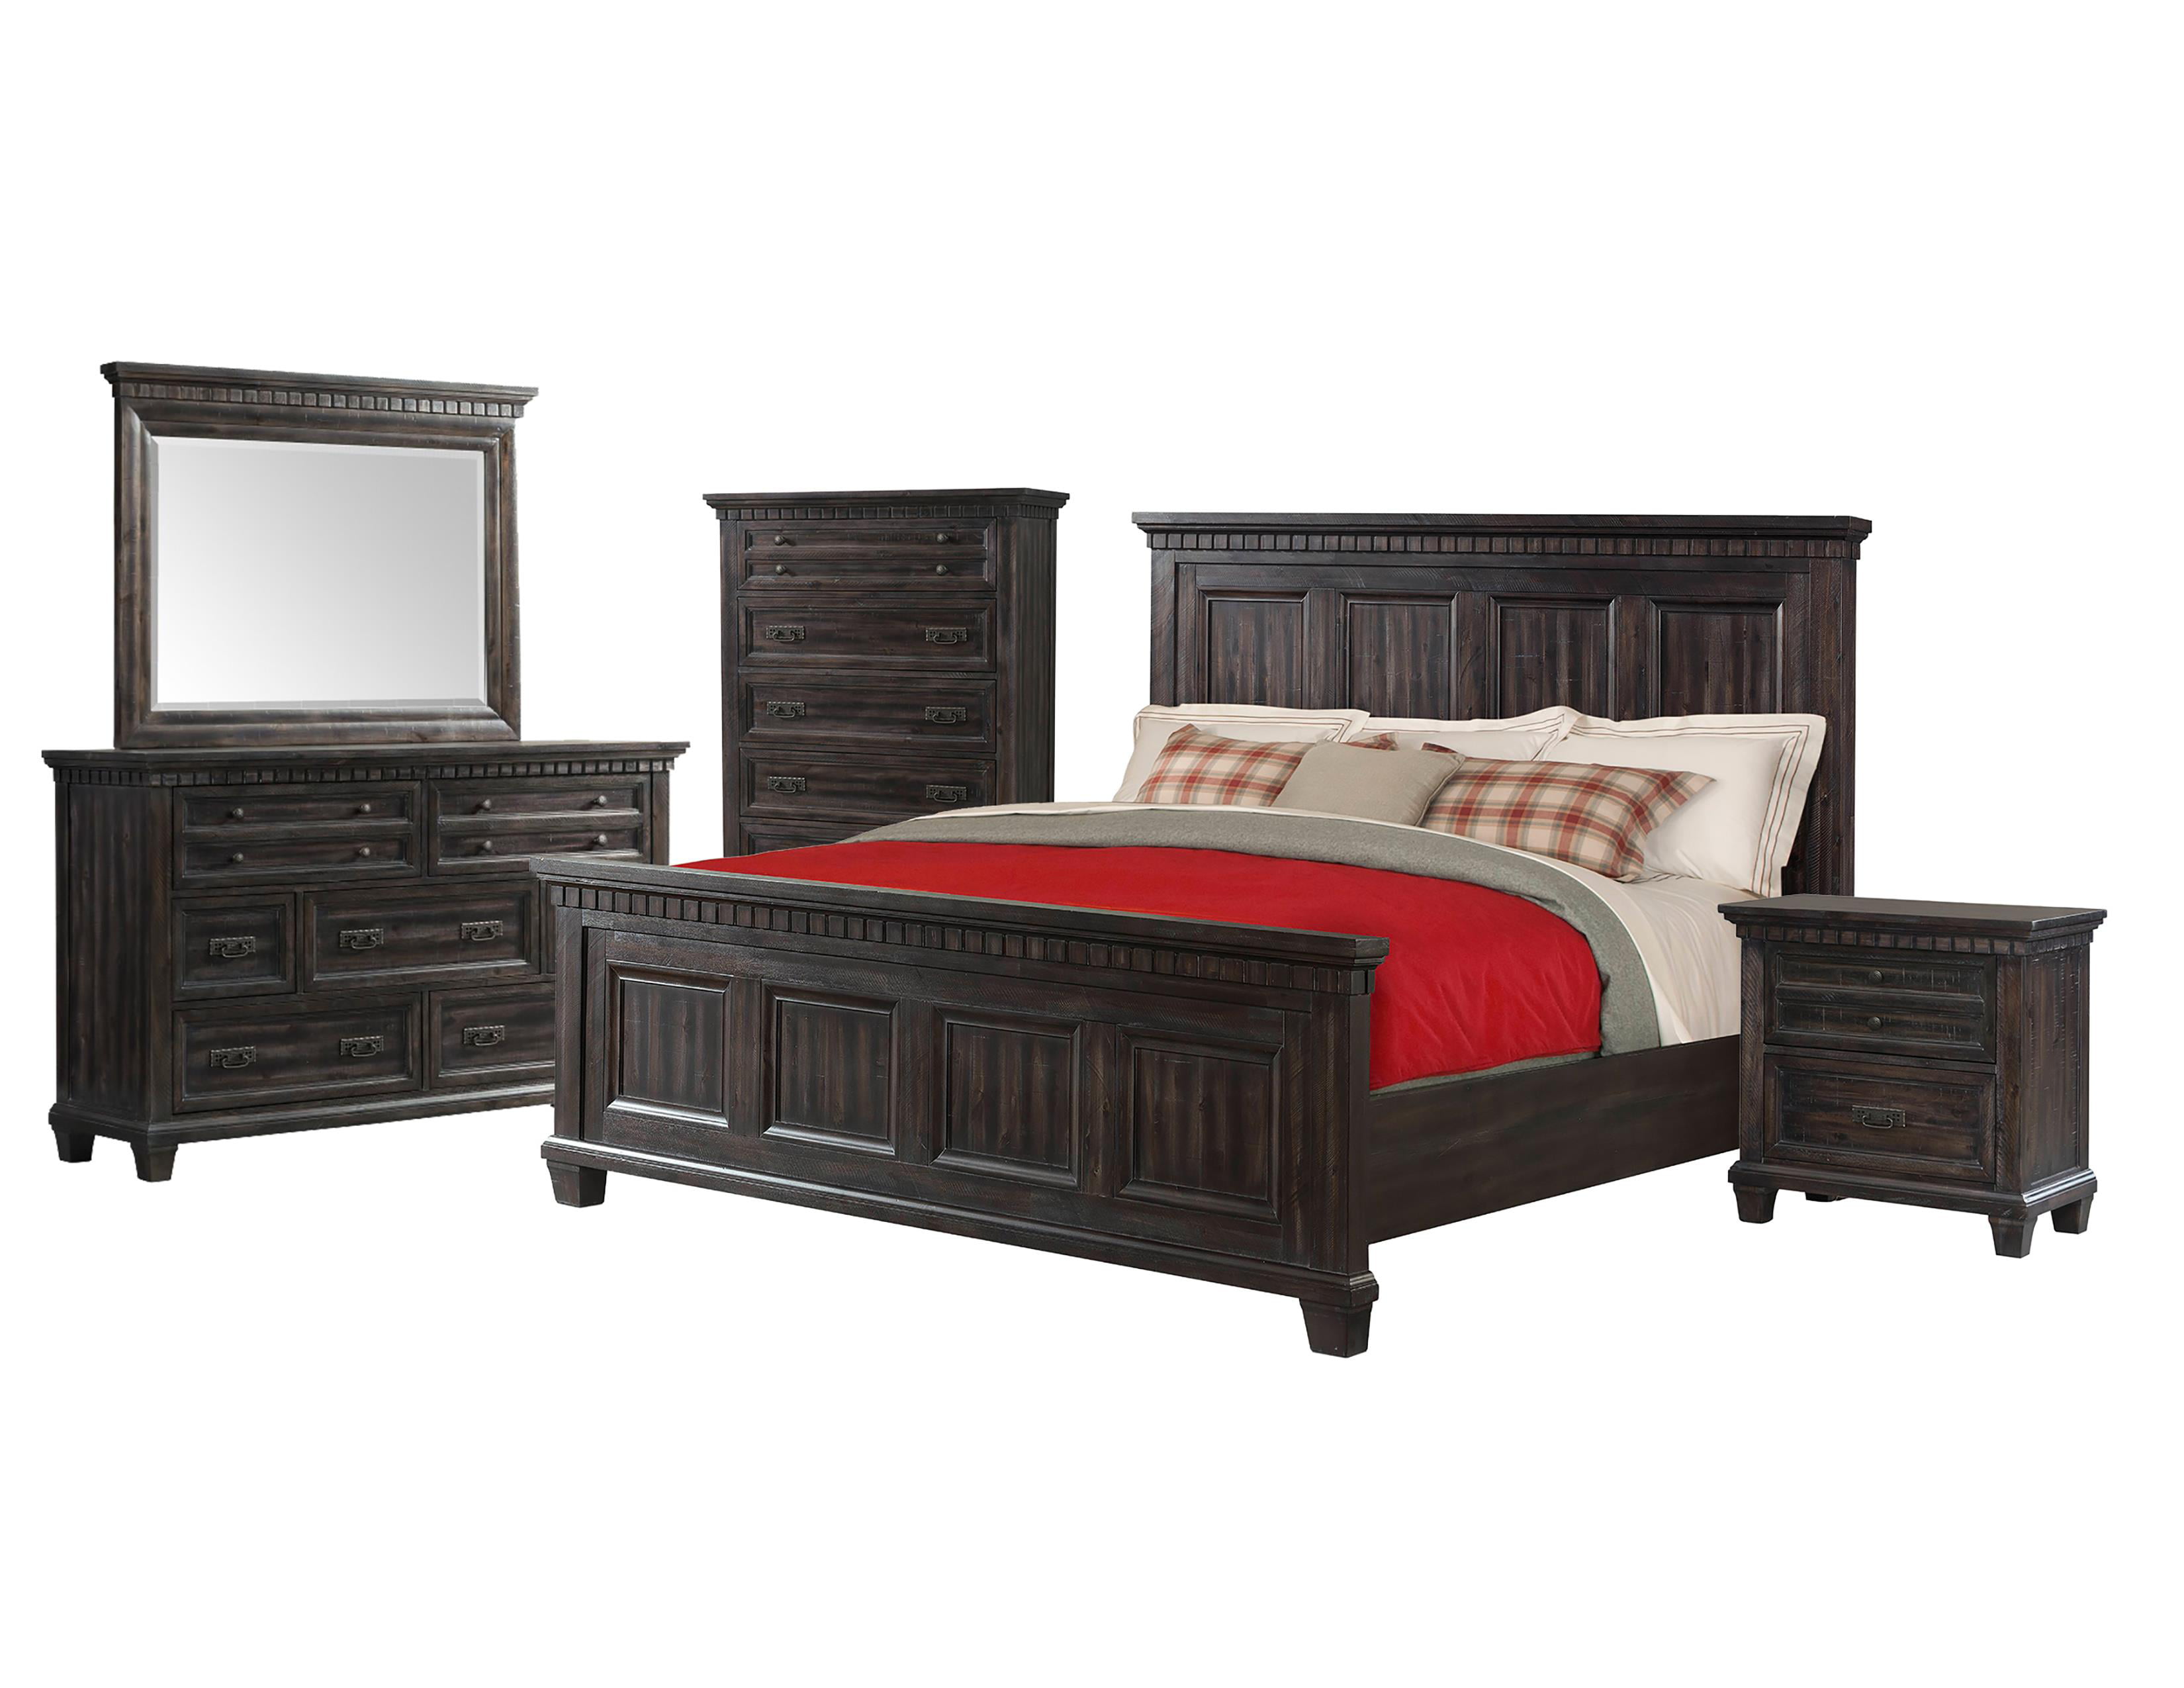 steele bedroom furniture design